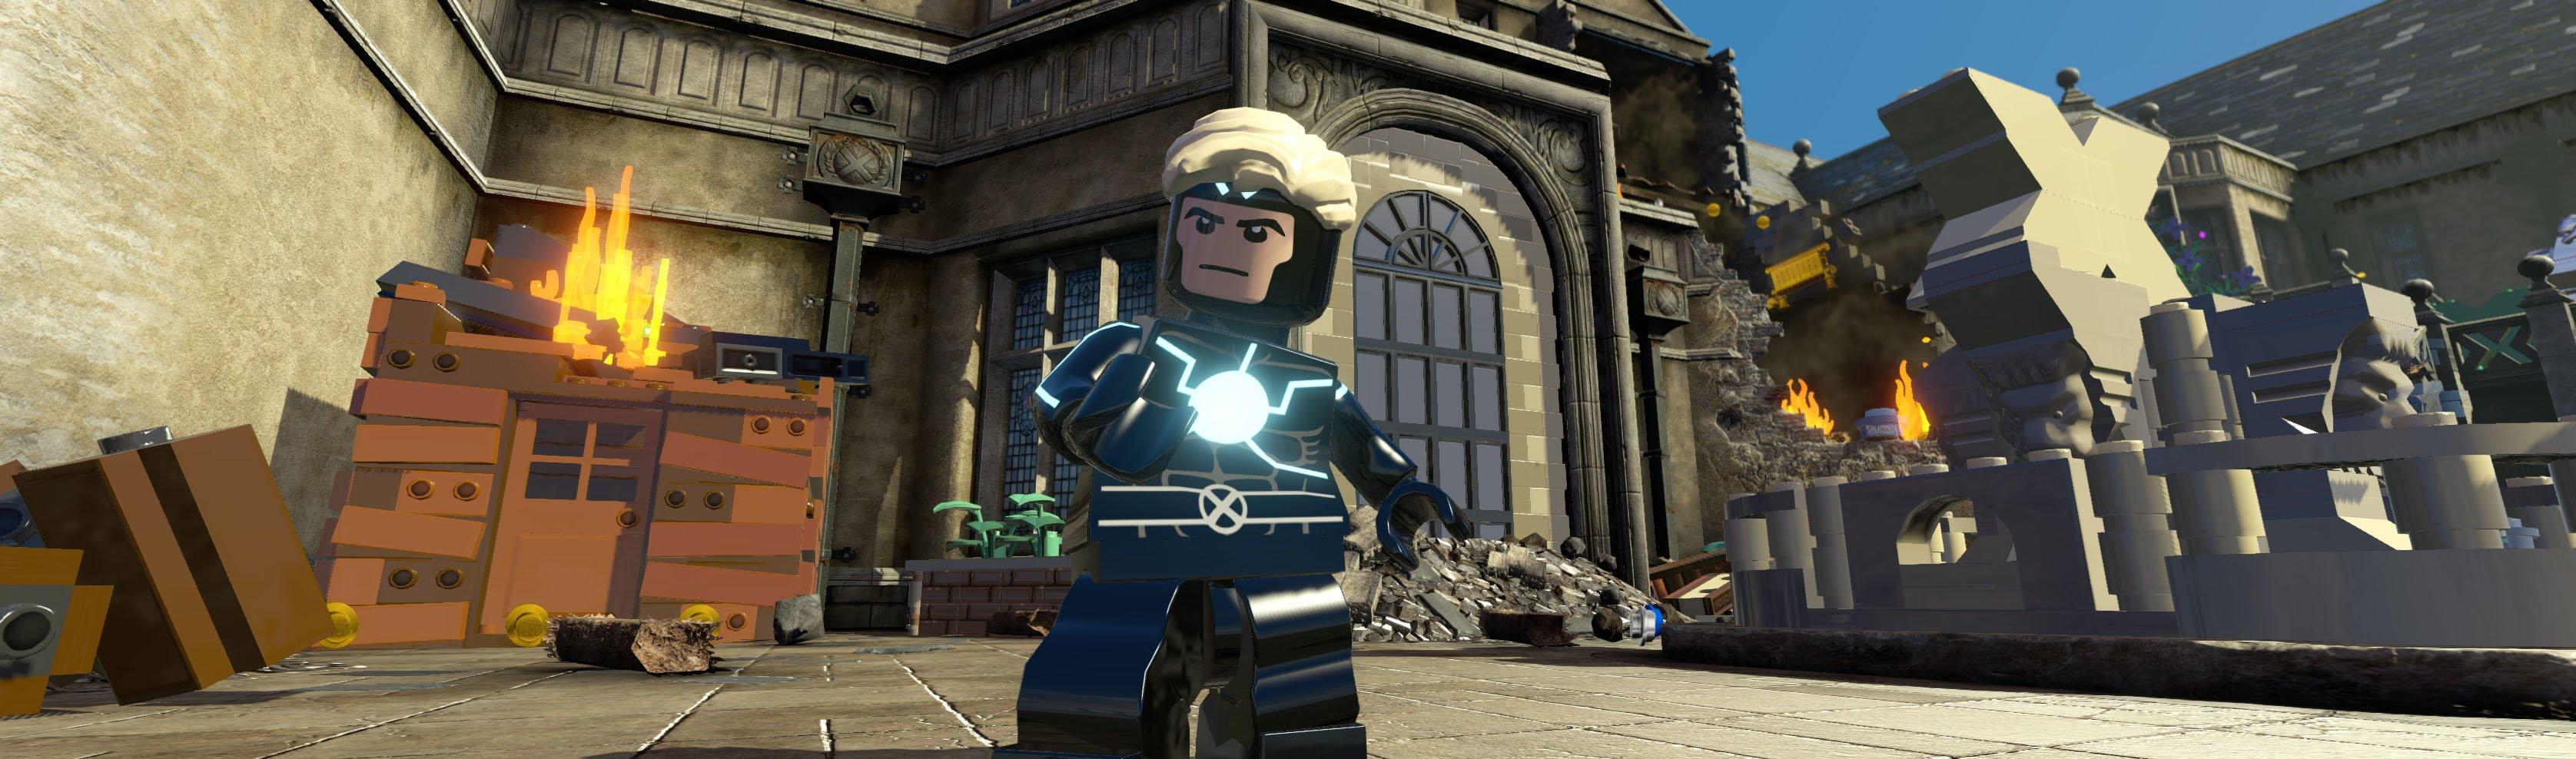  Lego Marvel Super Heroes (PS4) : Video Games